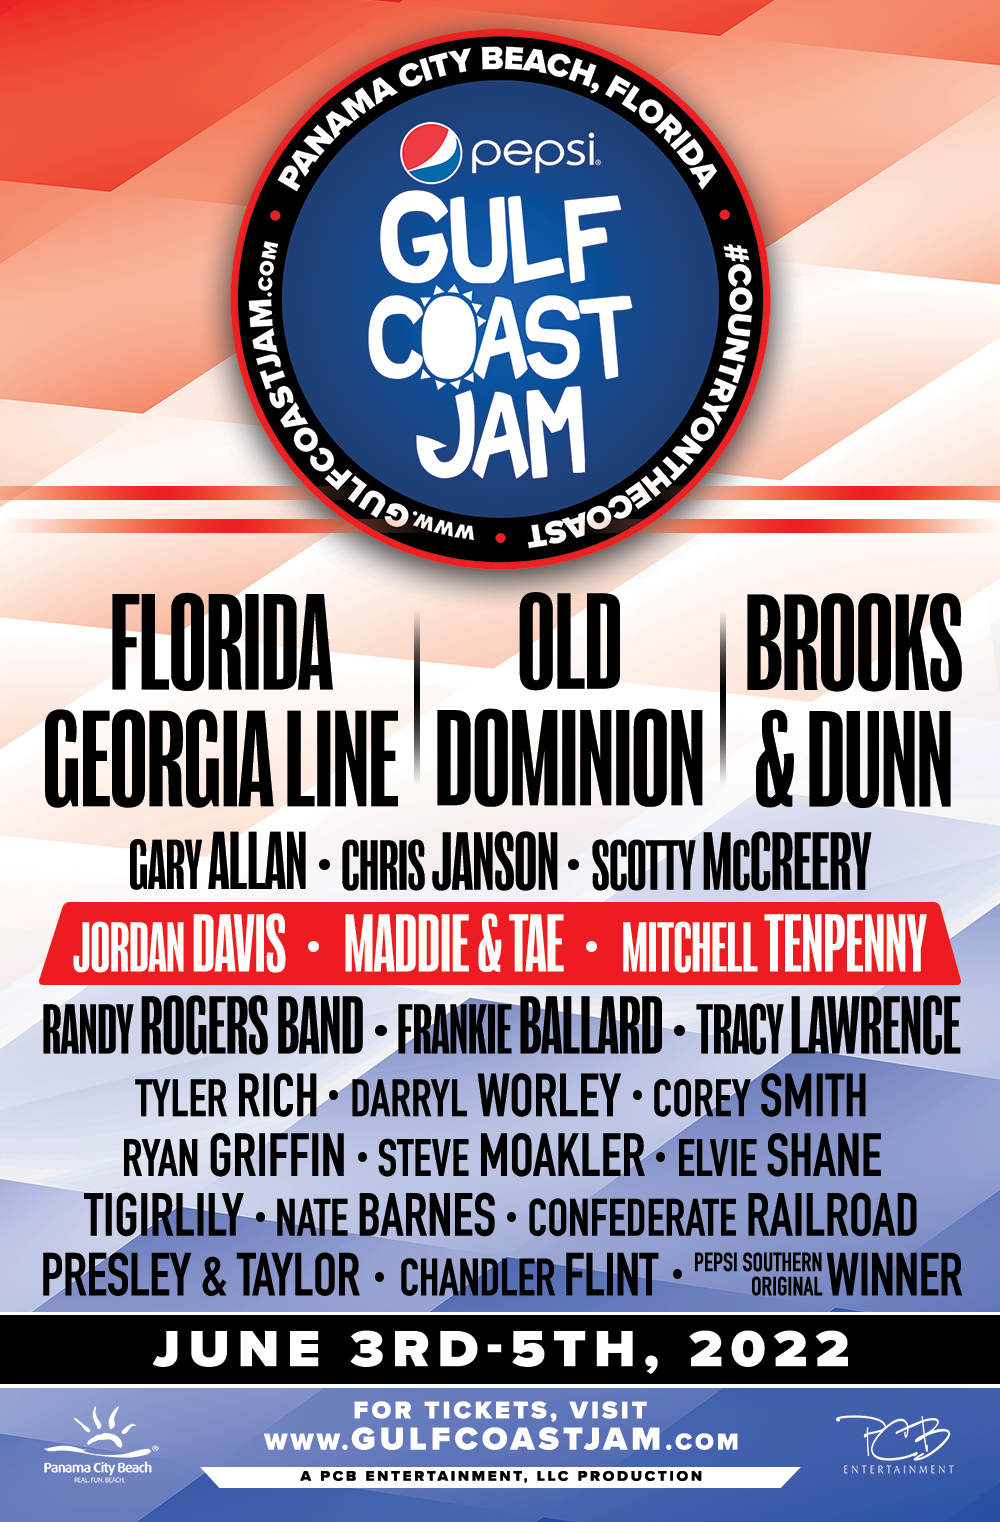 Pepsi Gulf Coast Jam June 35, 2022